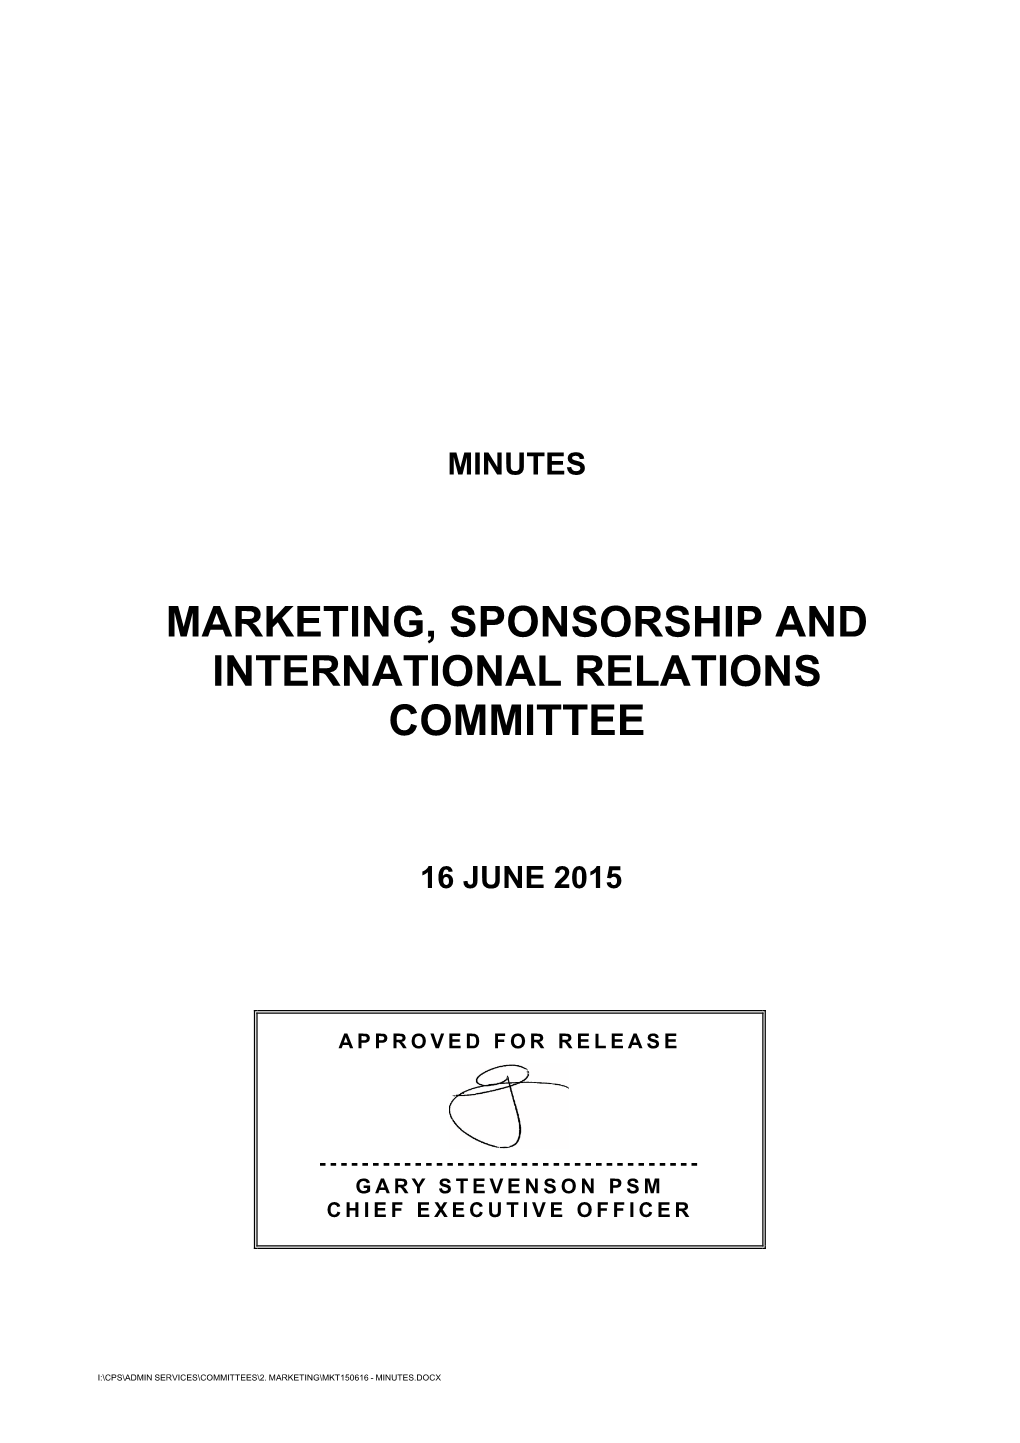 Marketing, Sponsorship and International Relations Committee